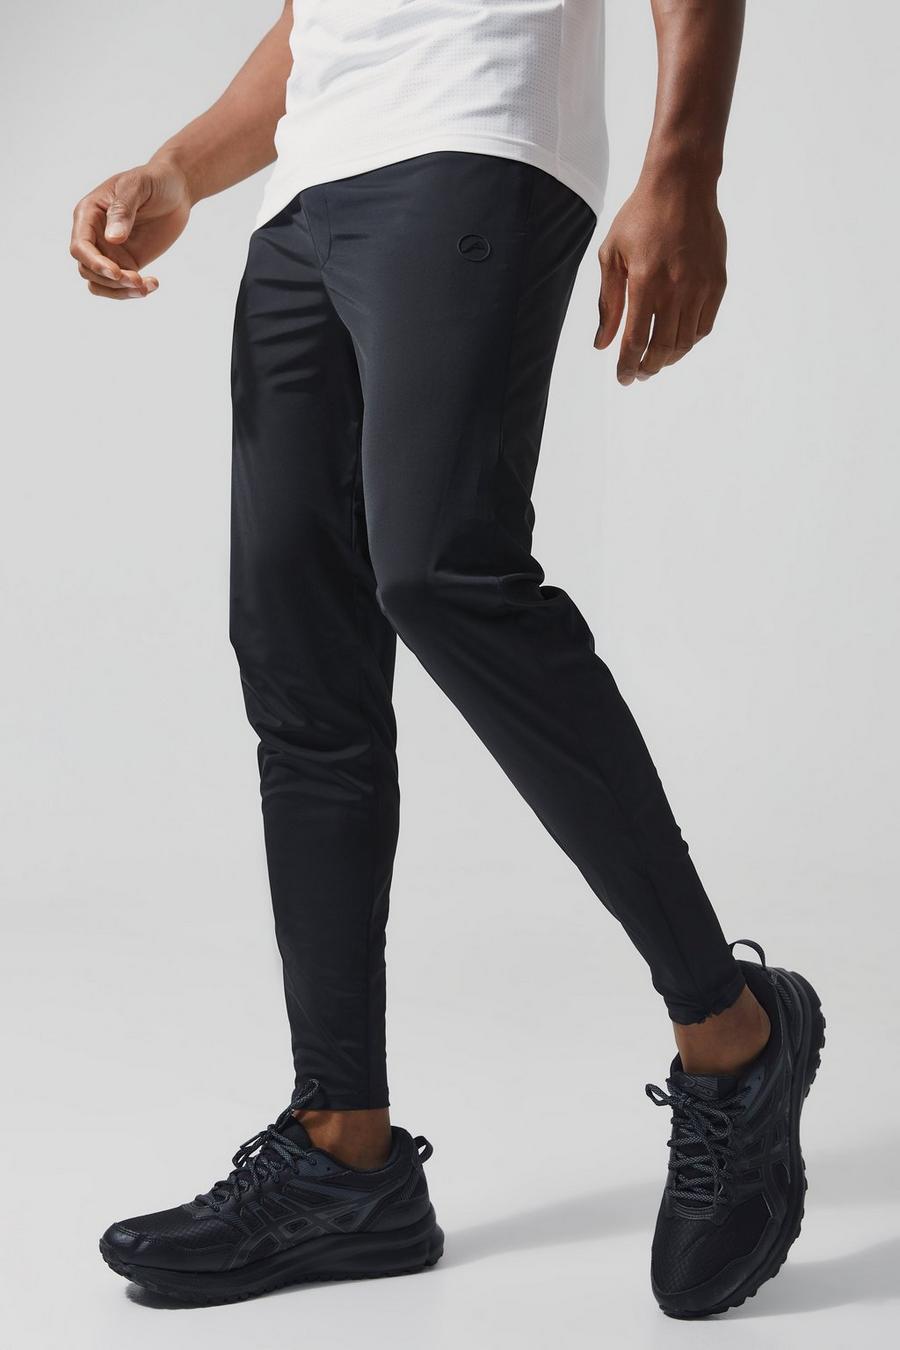 Pantaloni tuta Man Active Ultra Stretch, Black